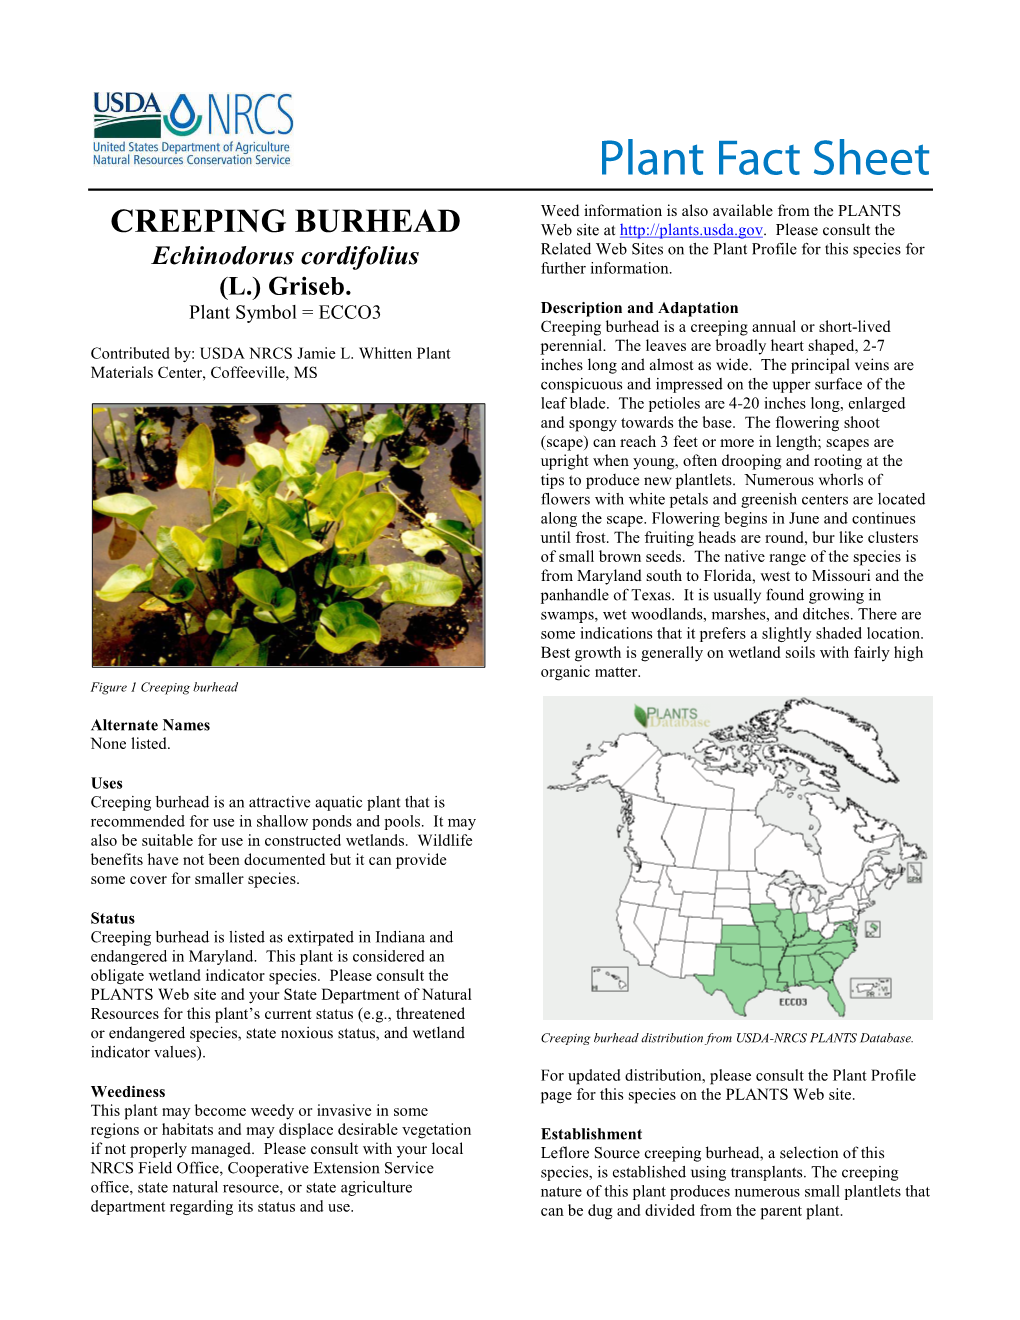 Creeping Burhead (Echinodrus Cordifolius) Plant Fact Sheet